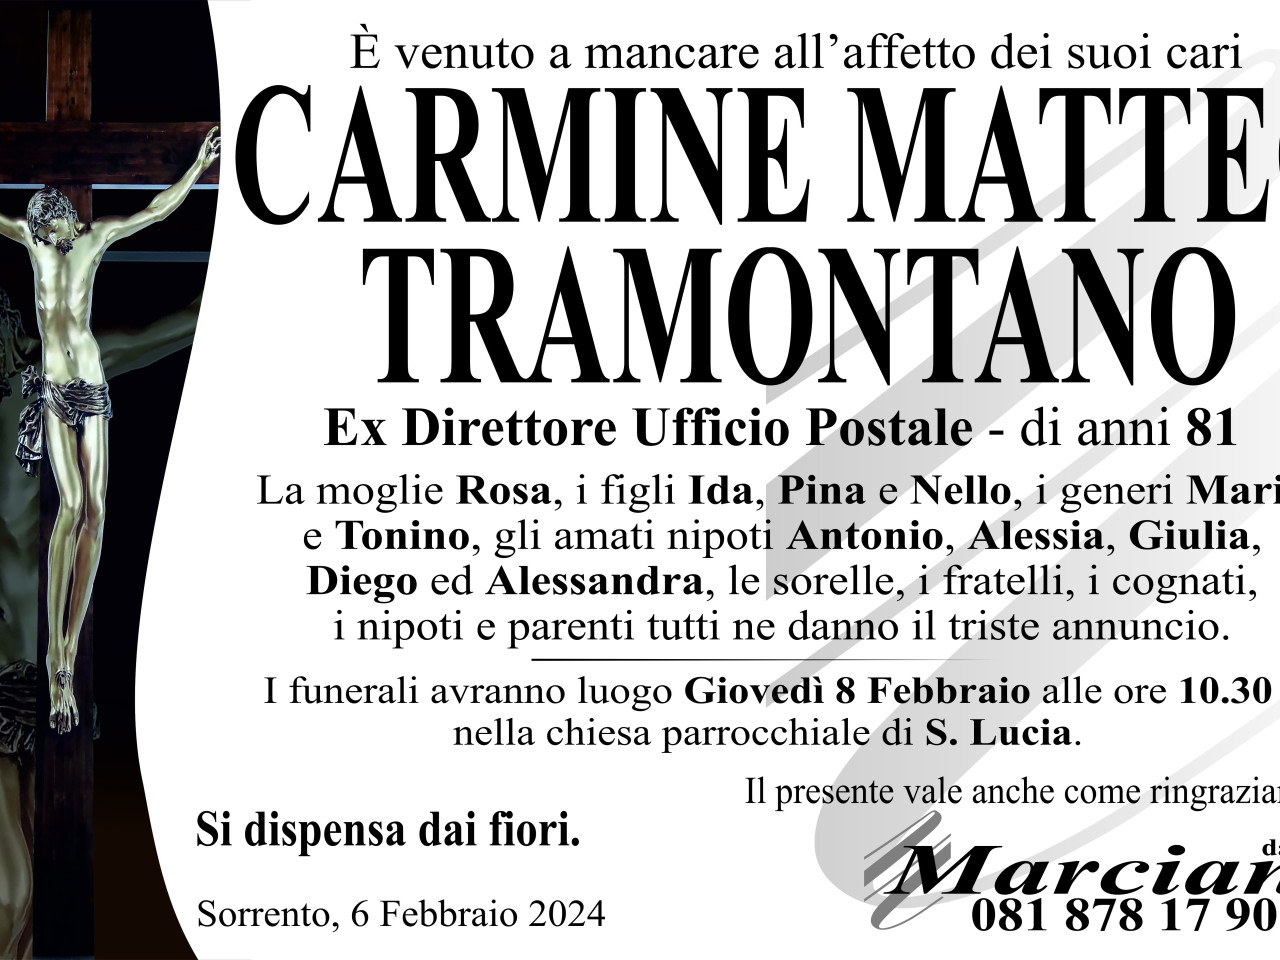 Tramontano Carmine Matteo